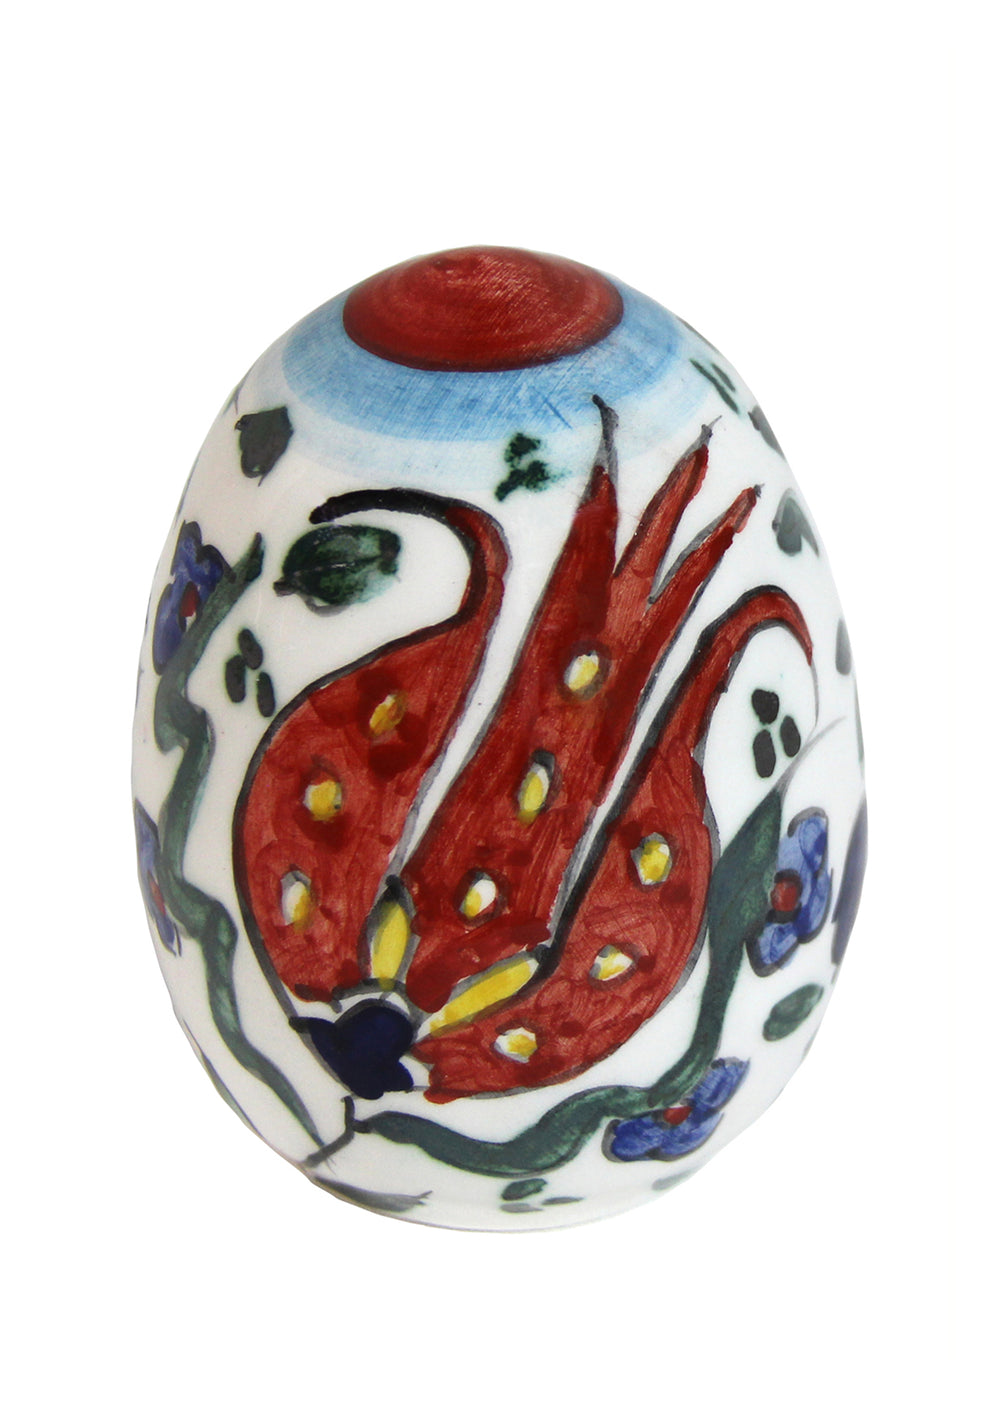 Ceramic egg with a tulip